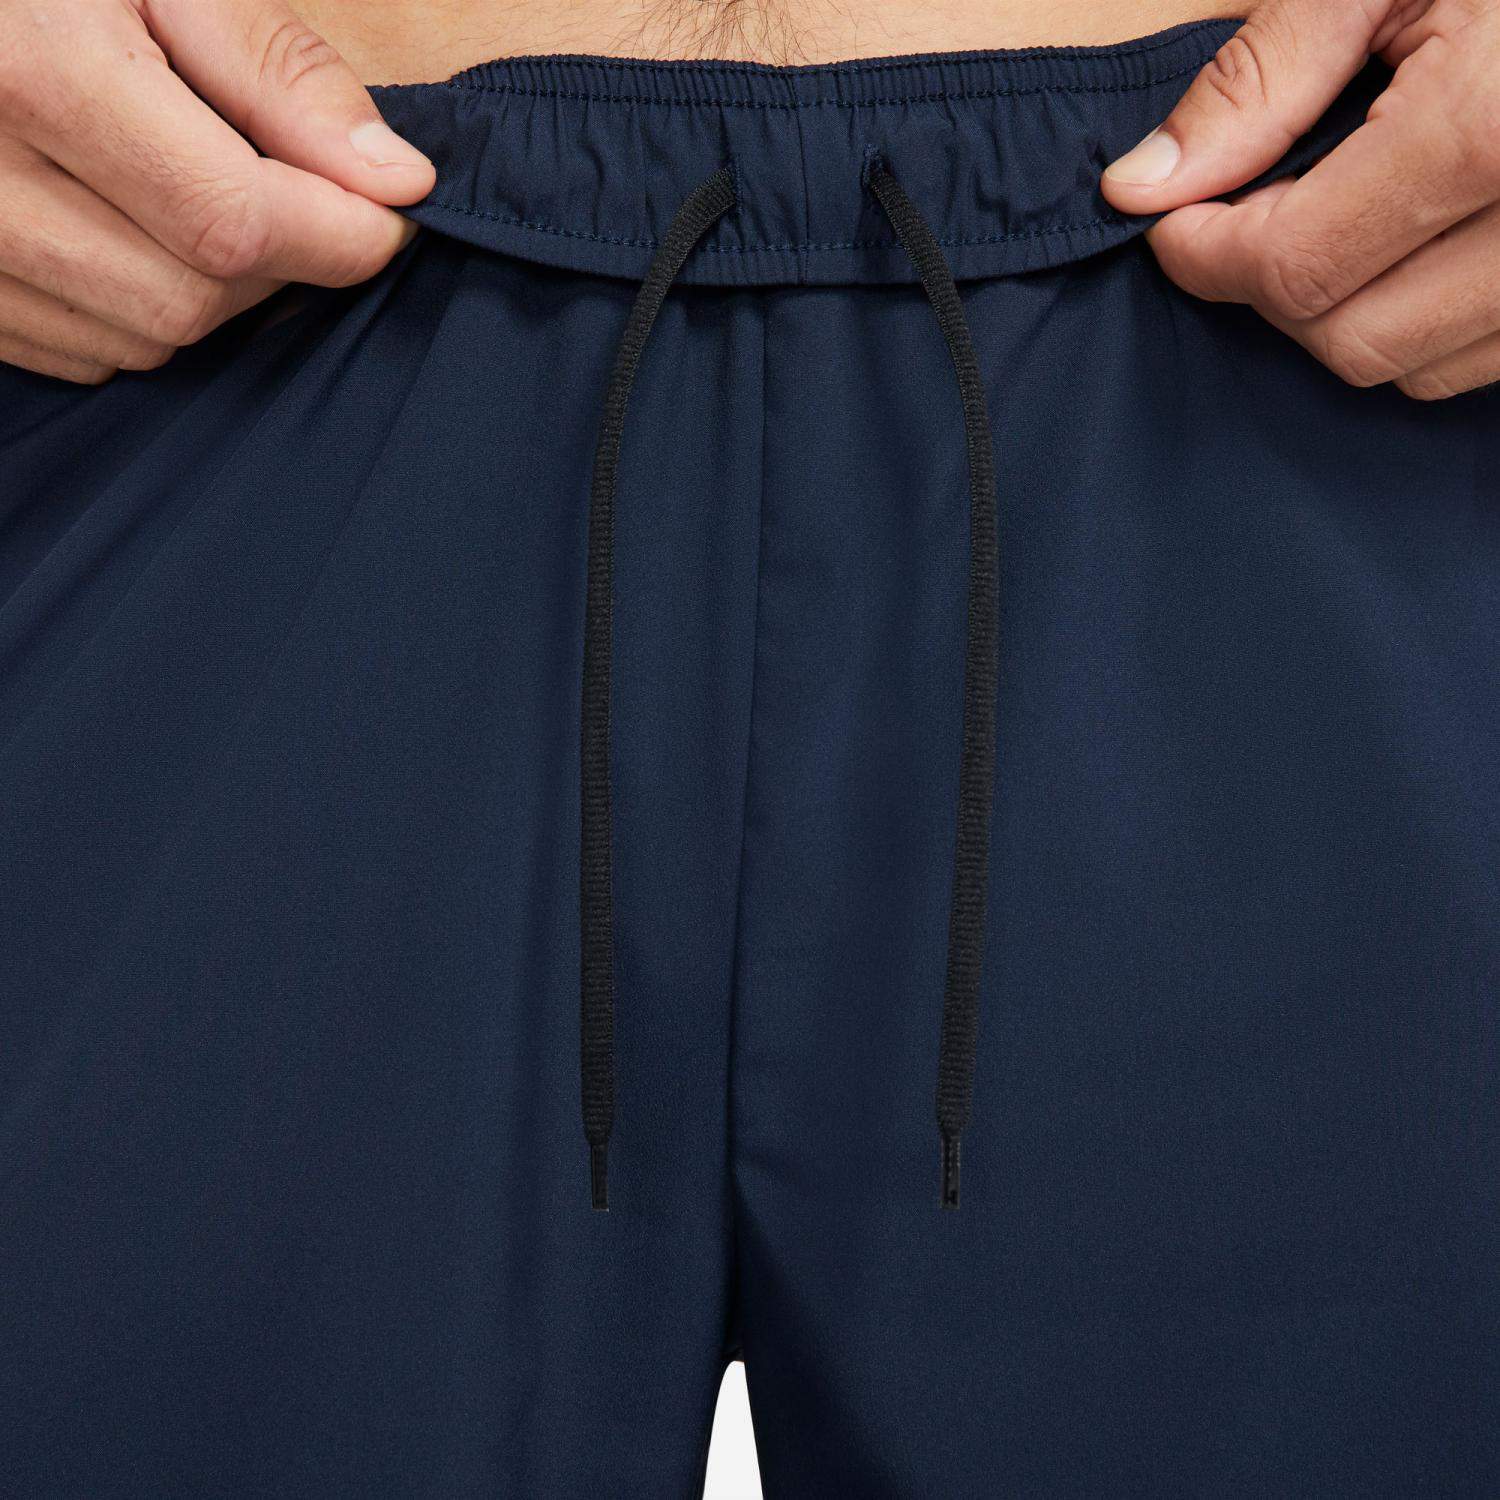 Nike Mens Flex Shorts - Camo waist band